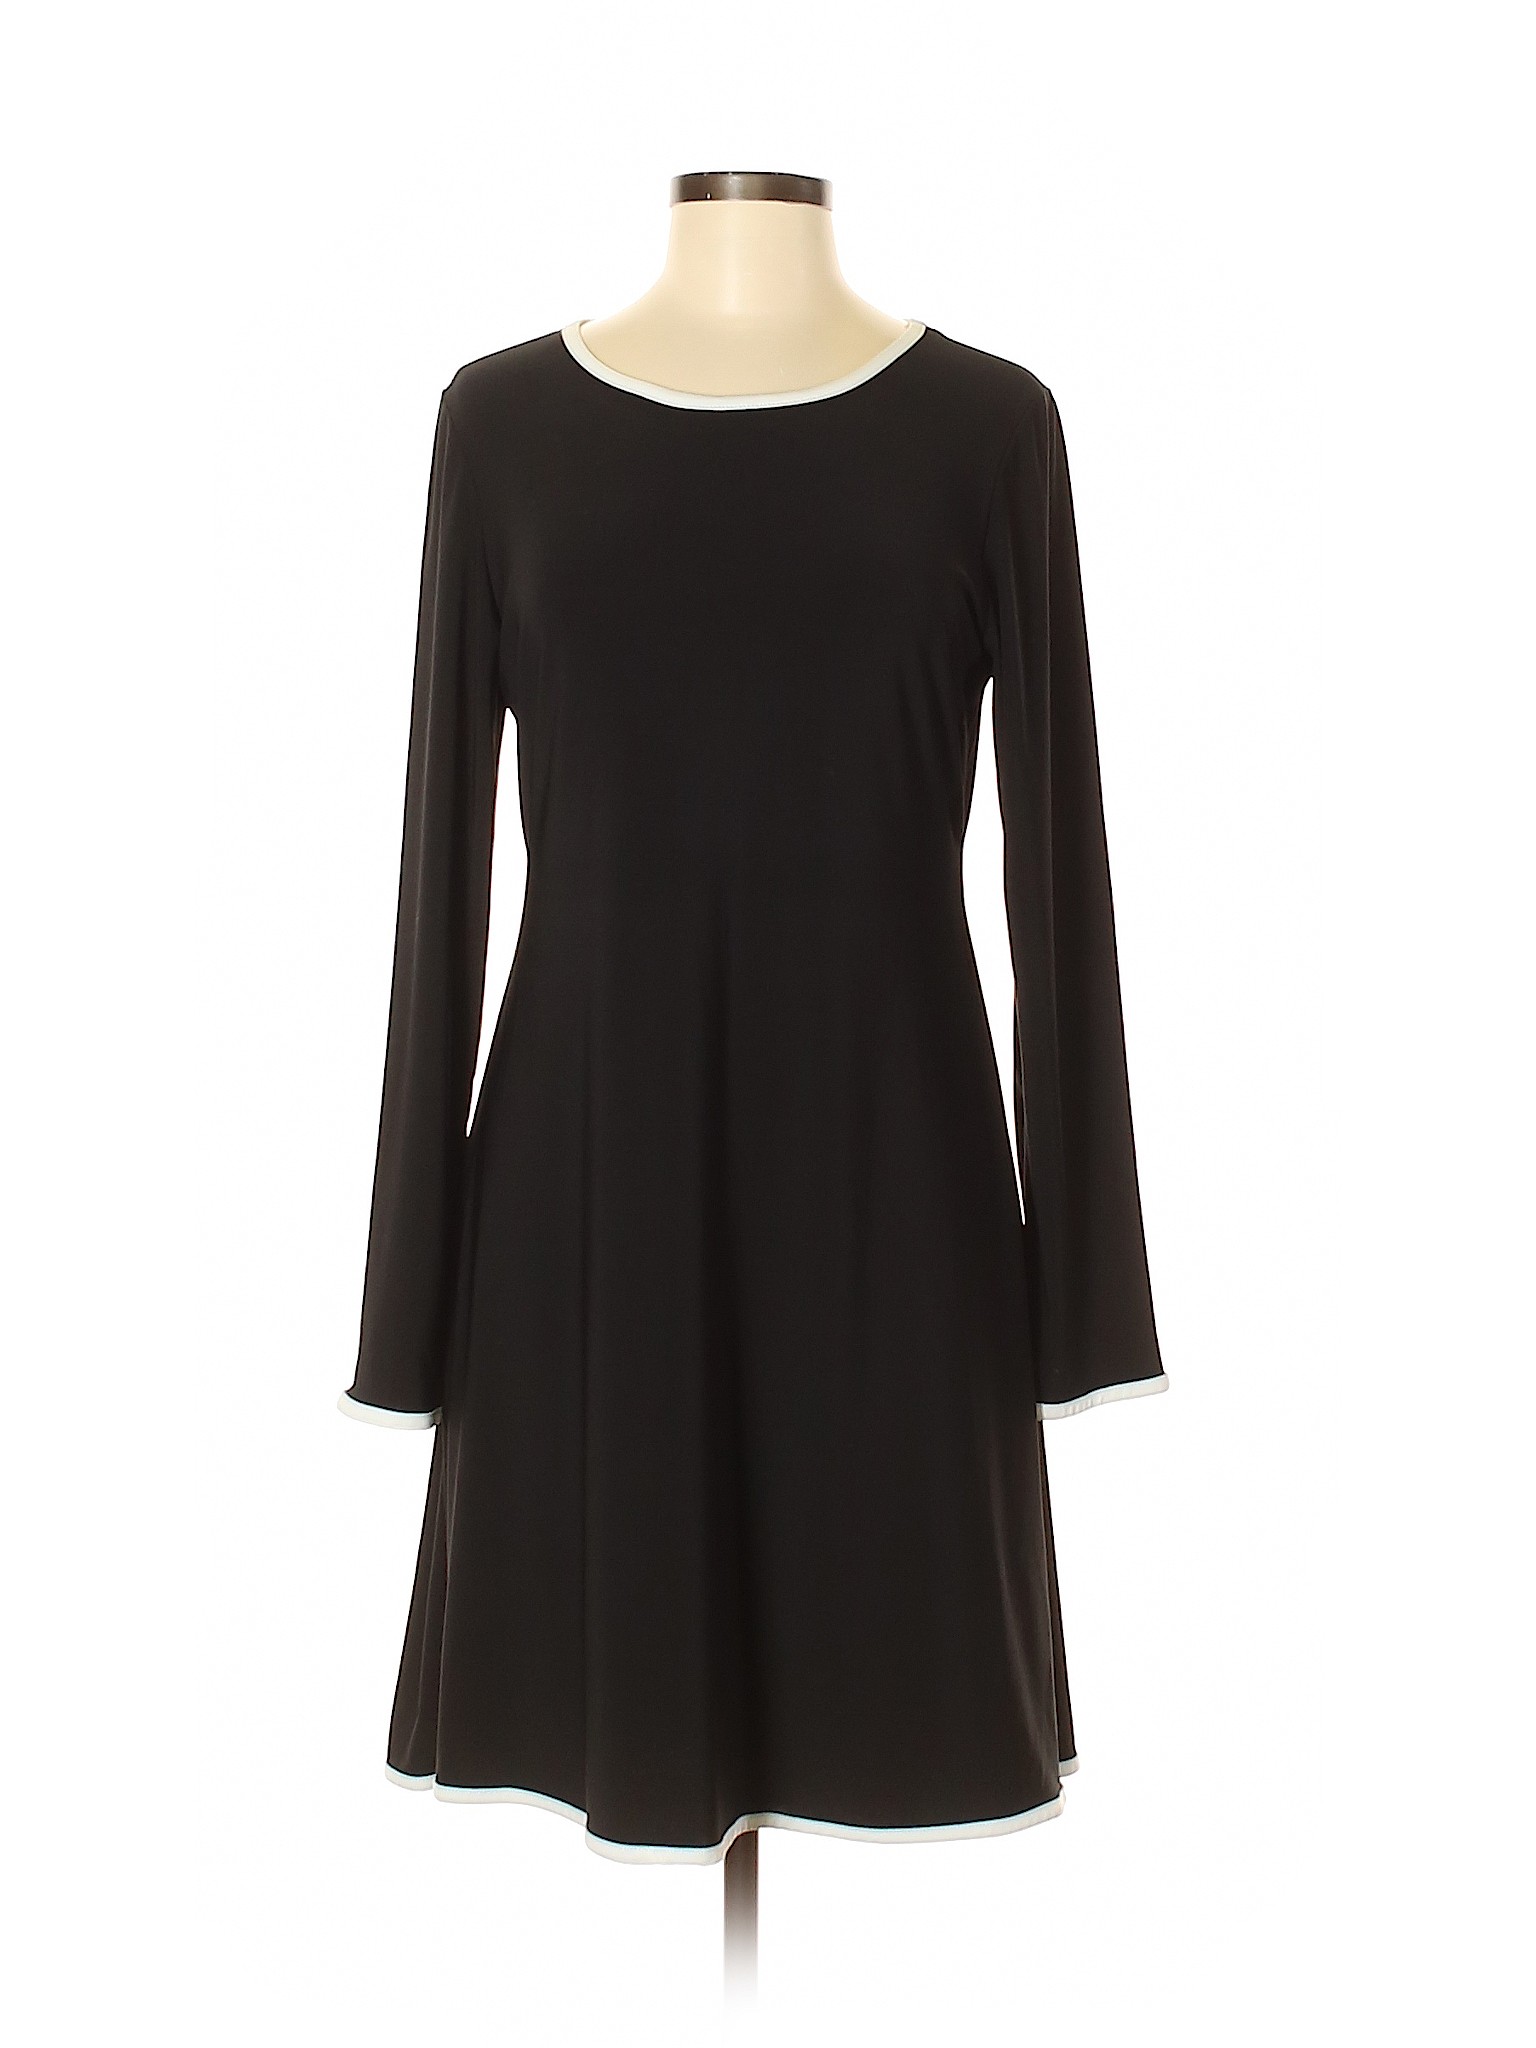 Annalee + Hope Women Black Casual Dress Med | eBay